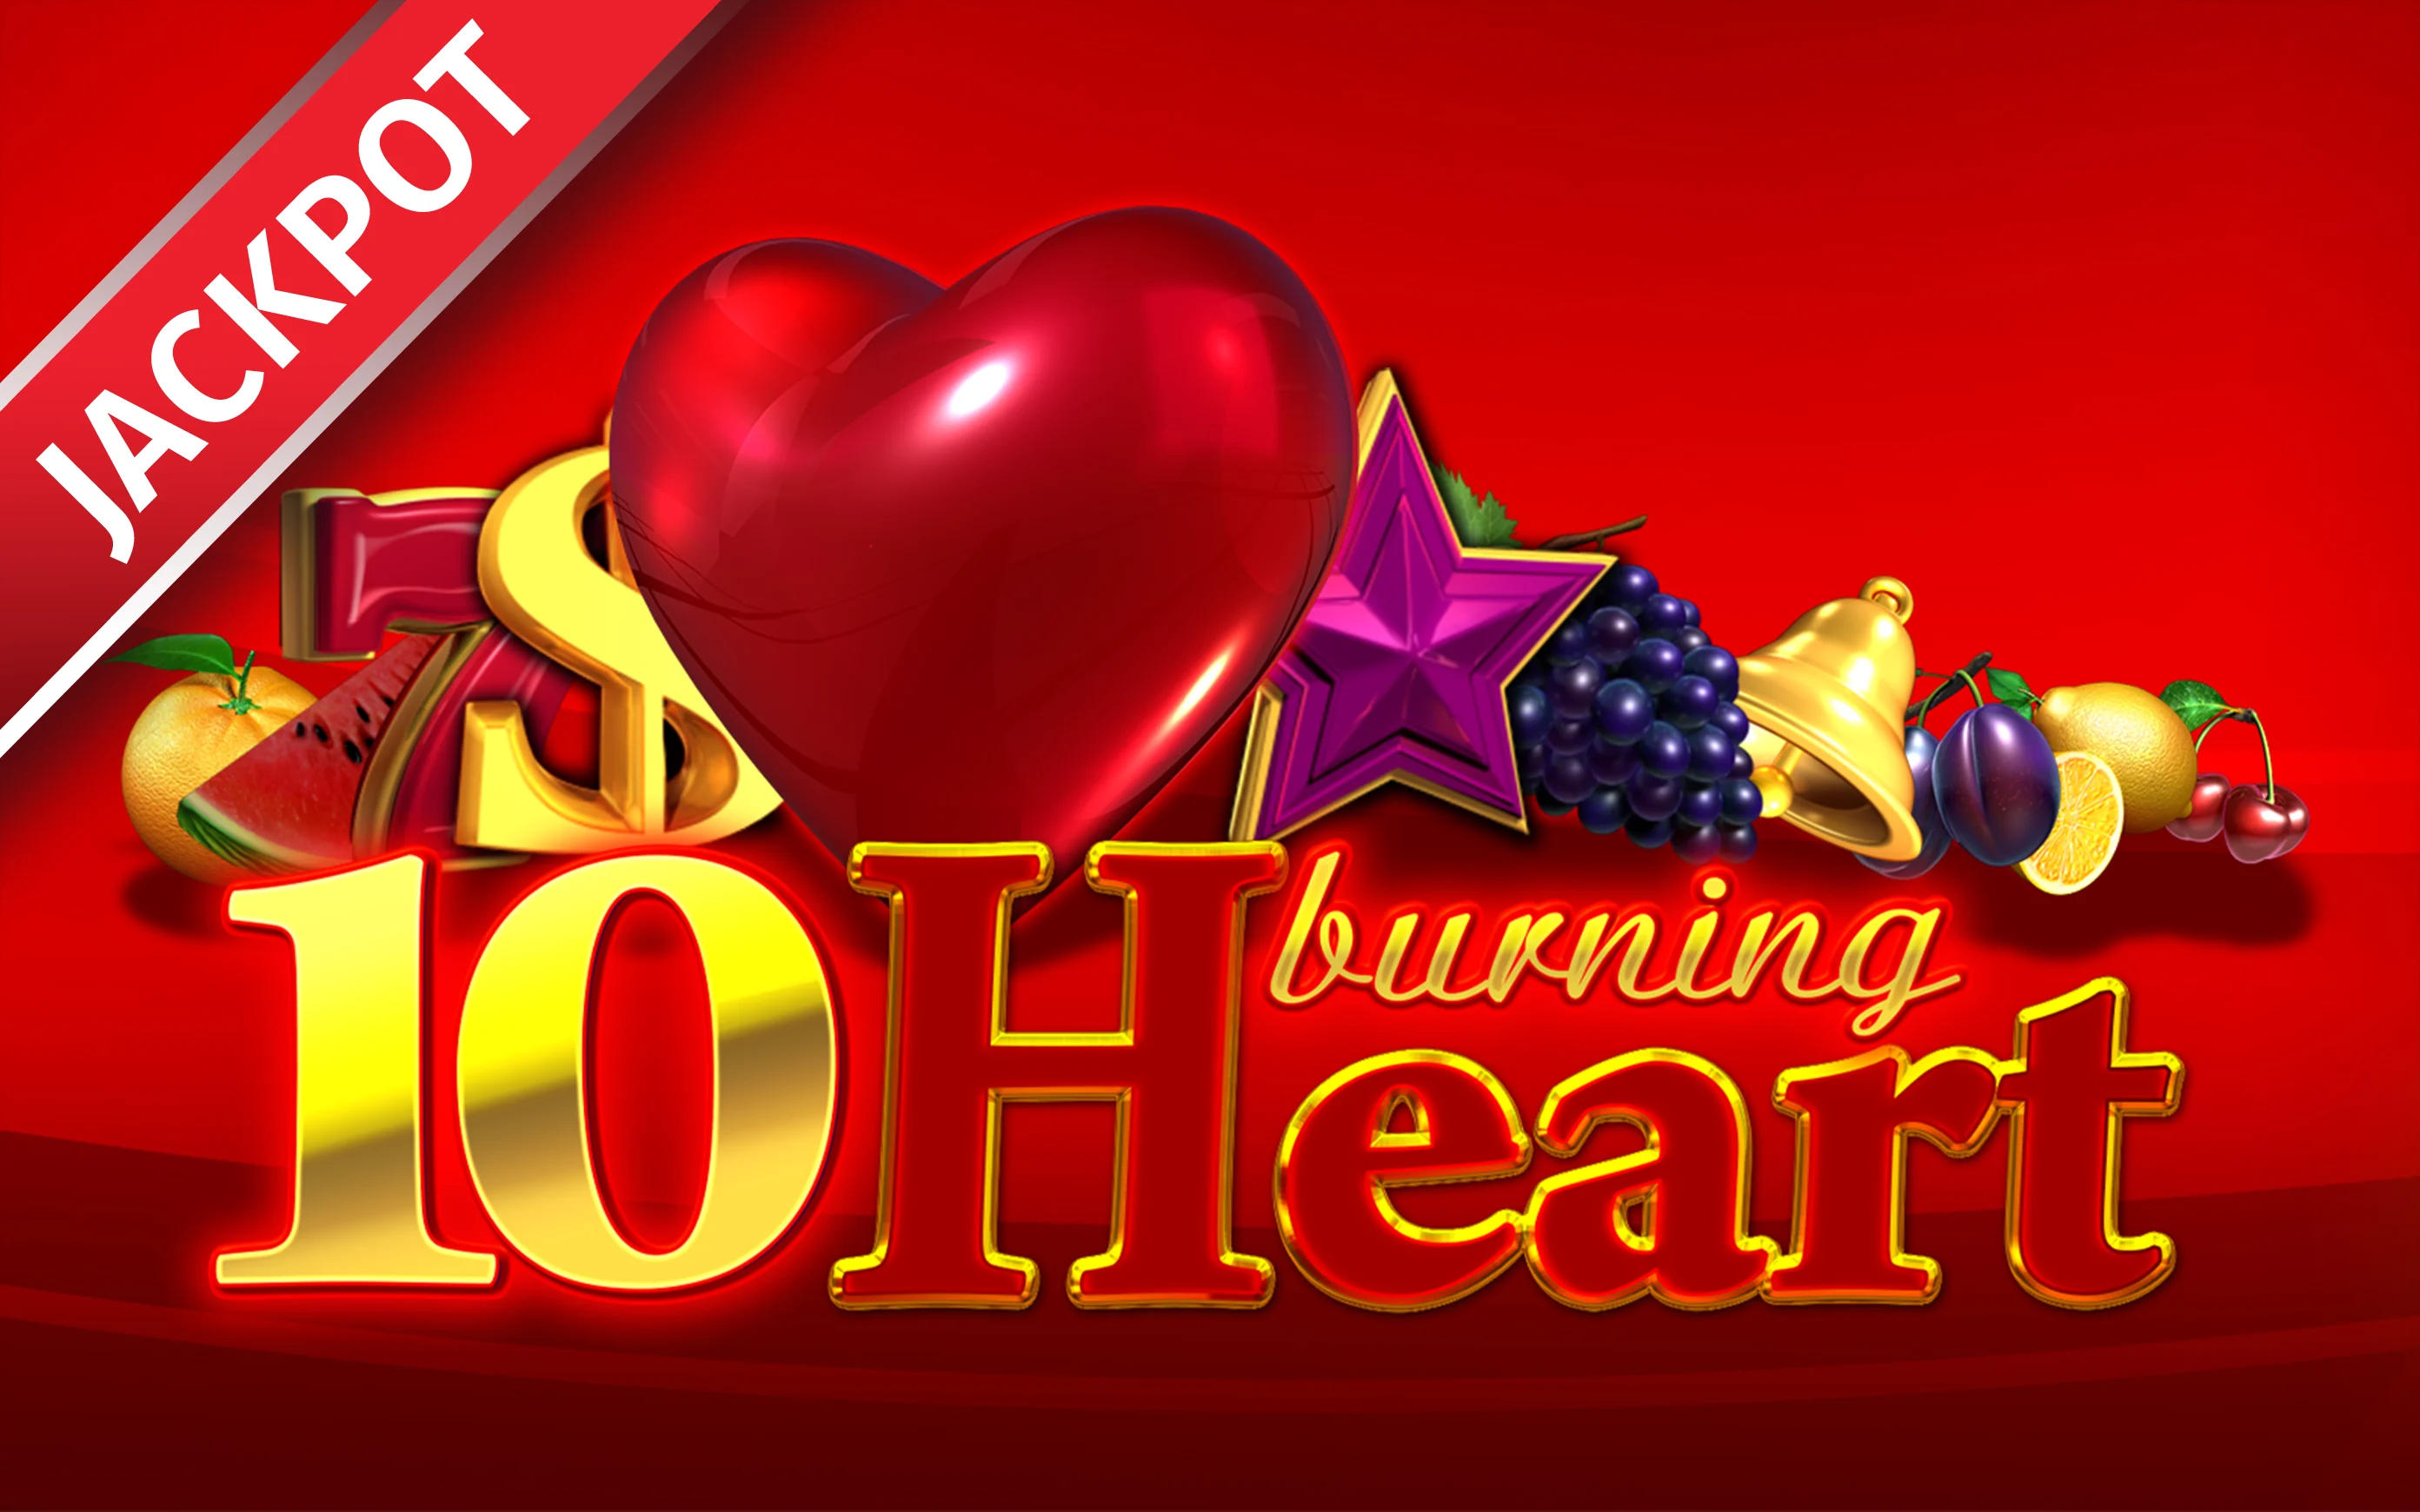 Juega a 10 Burning heart en el casino en línea de Starcasino.be